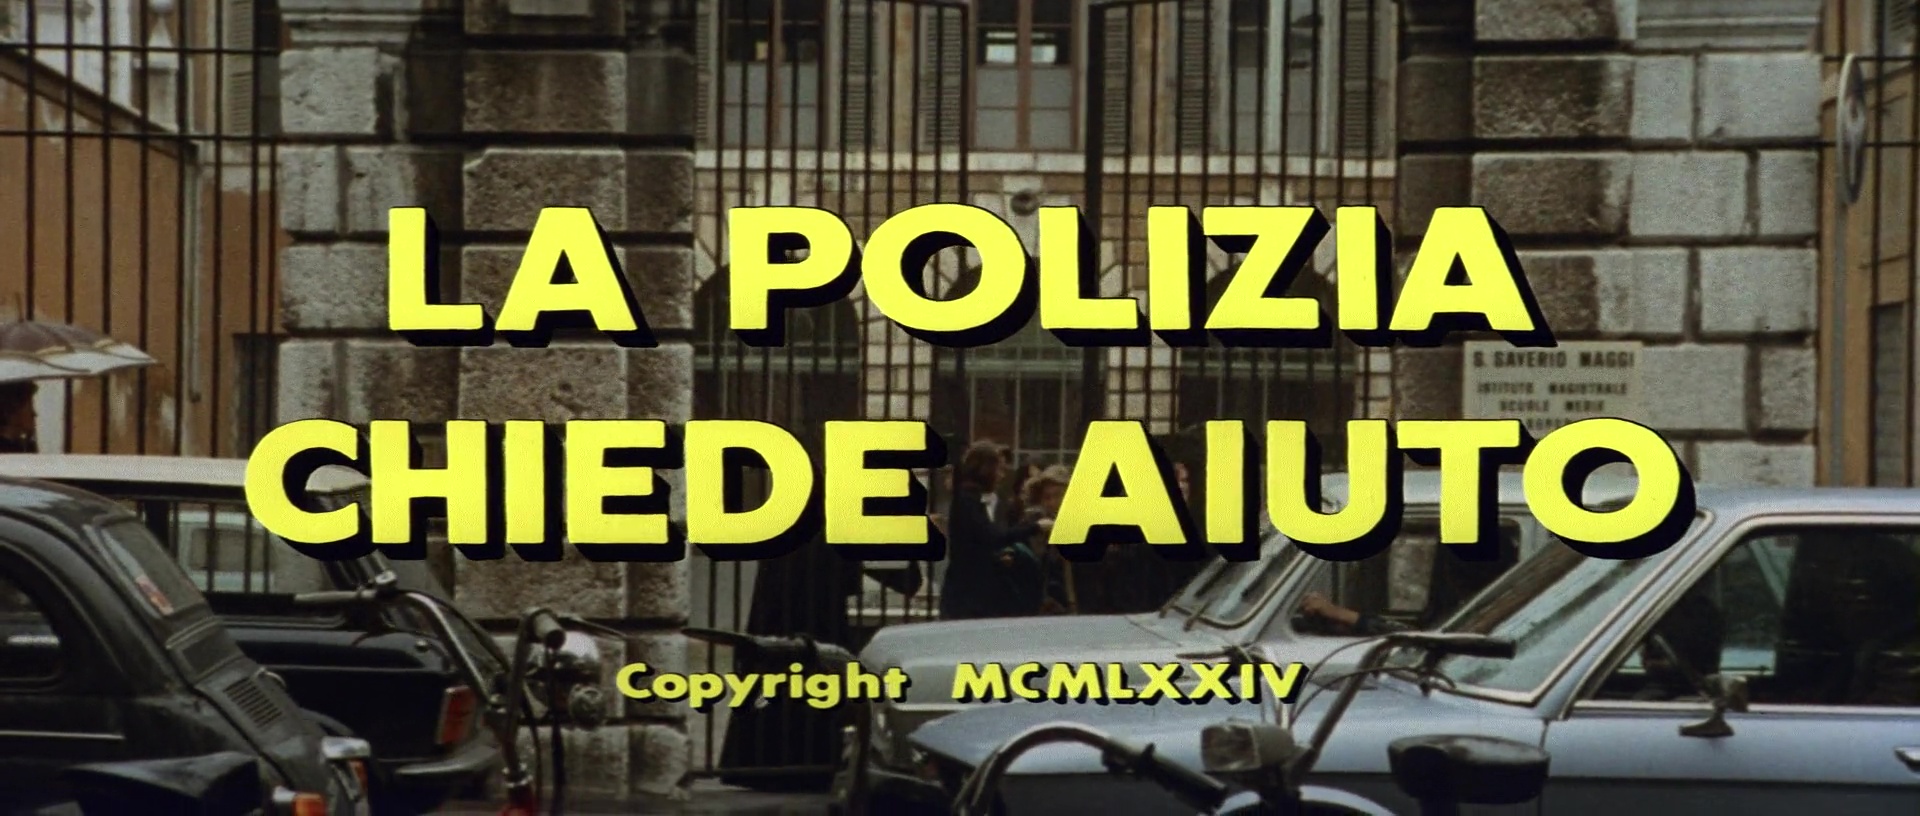 La polizia chiede aiuto (1974) titles.jpg